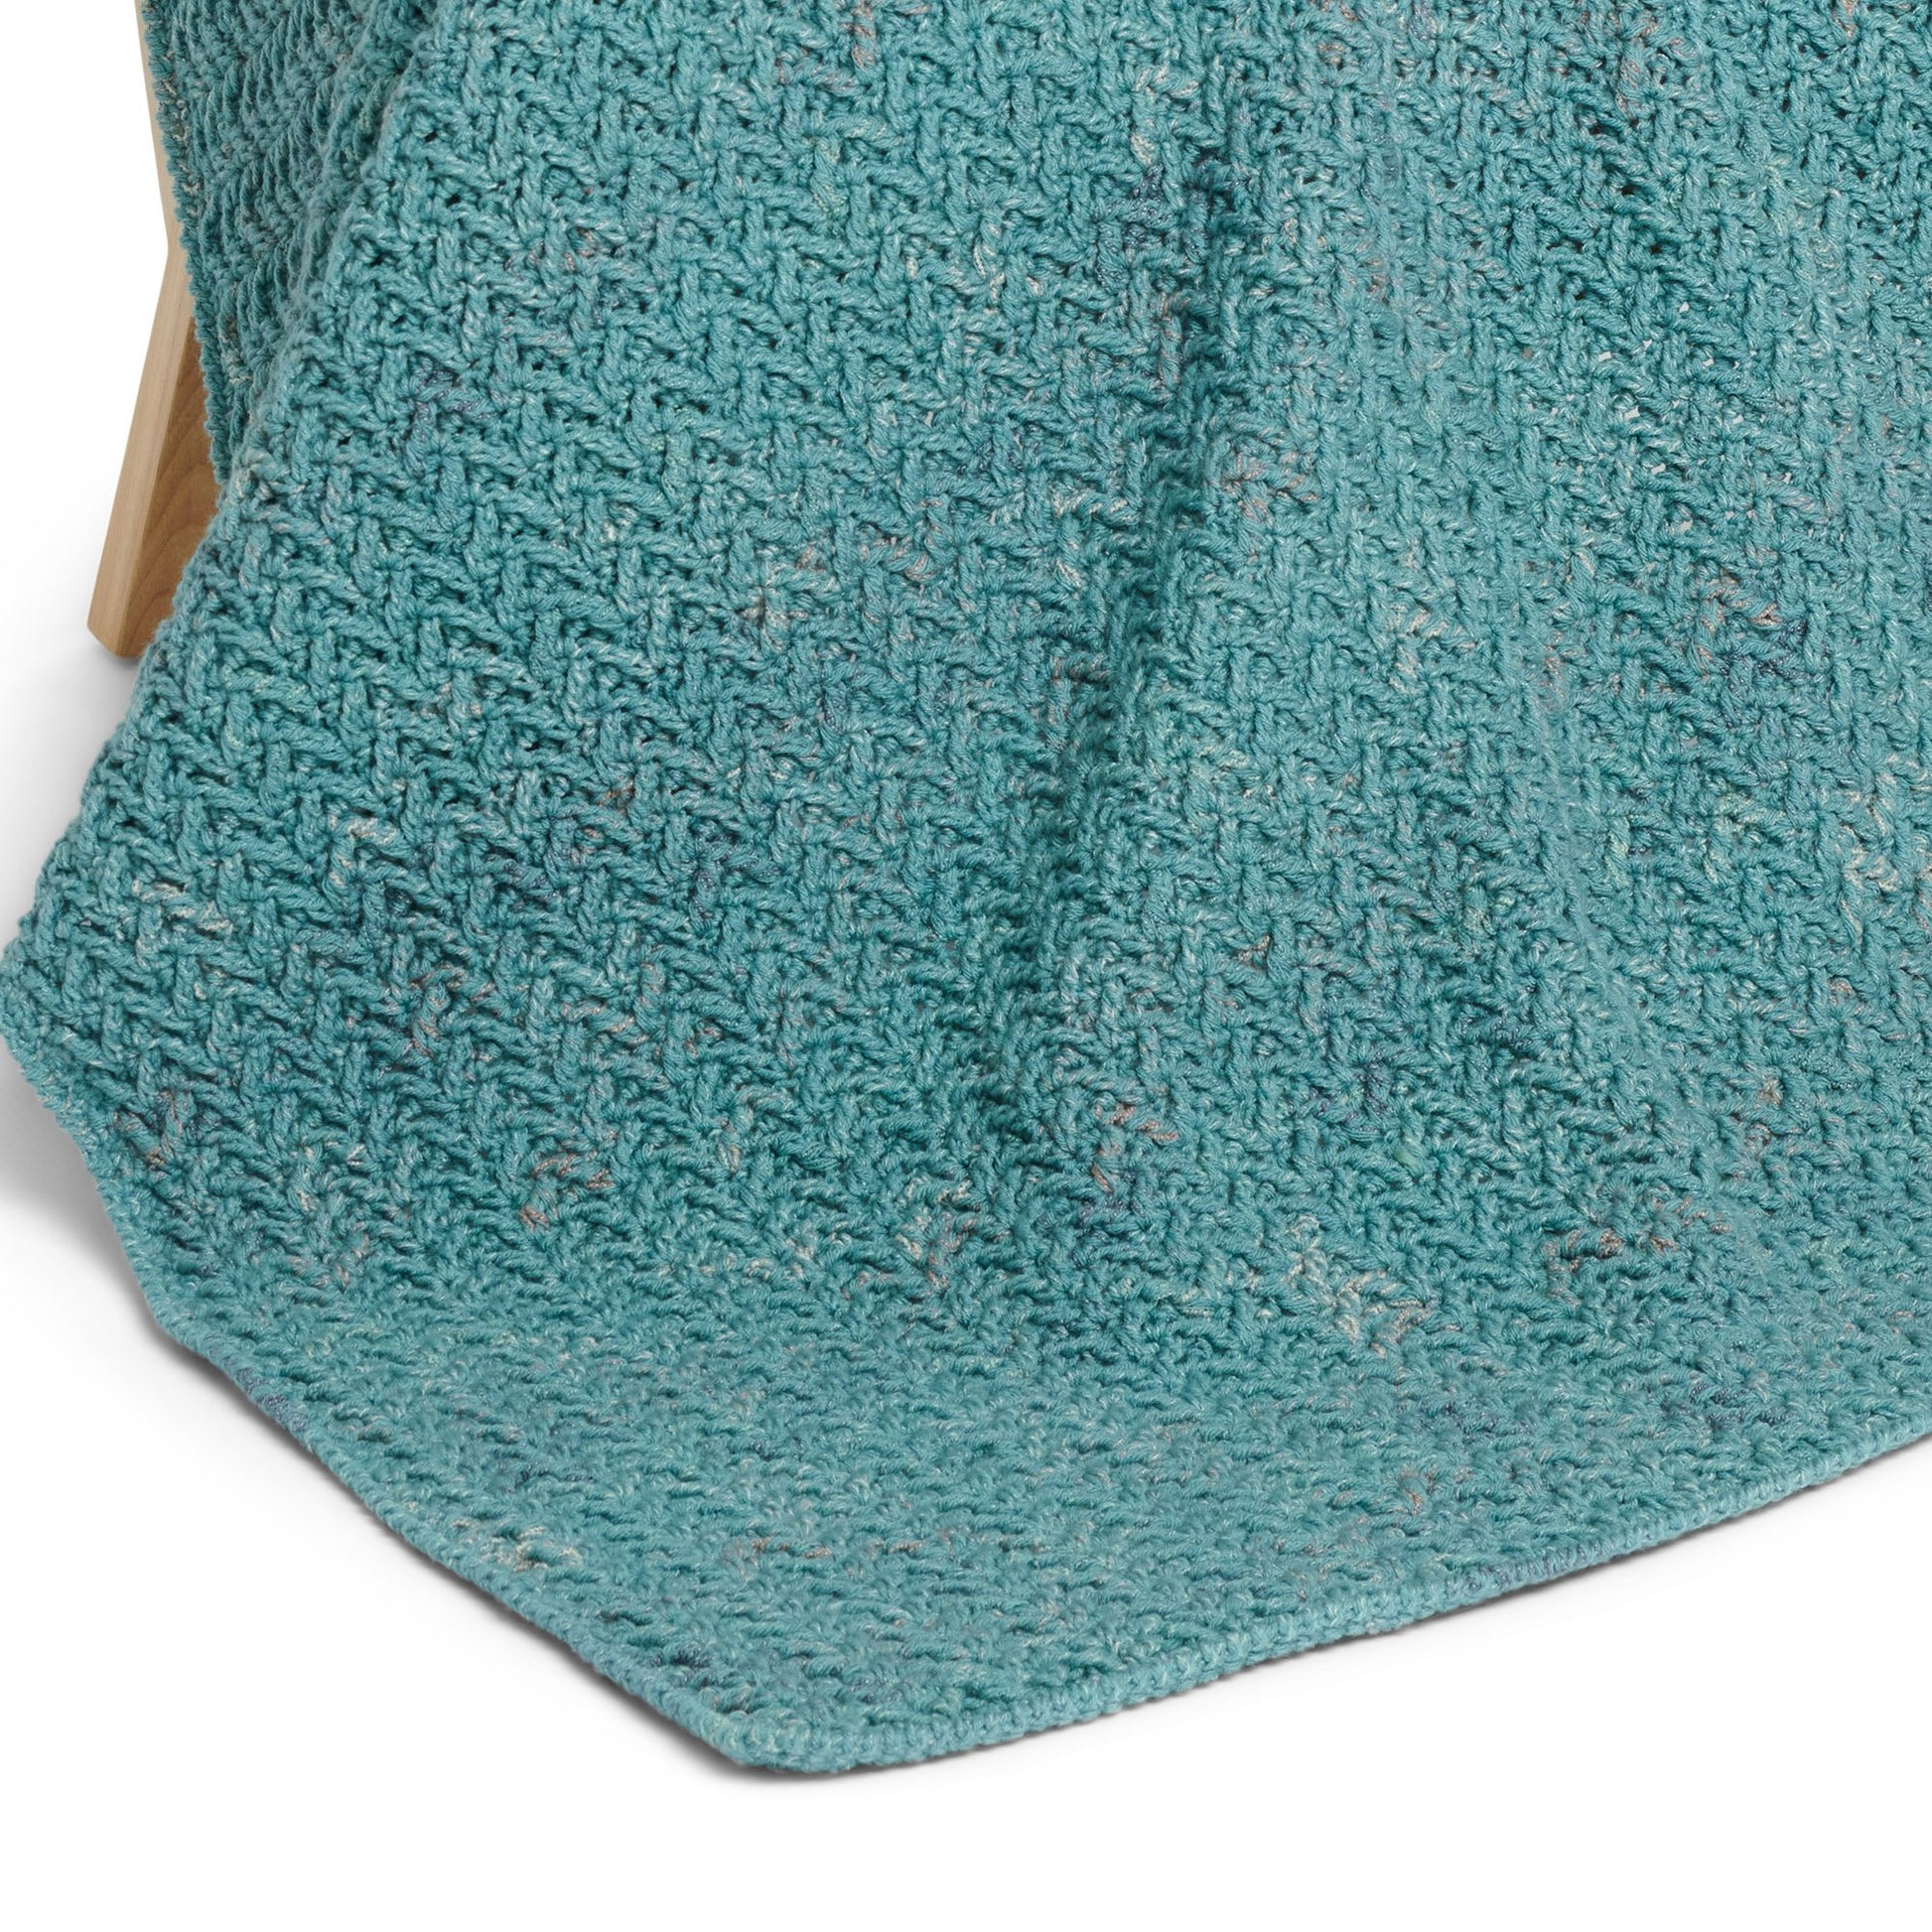 Free Caron Herringbone Texture Crochet Blanket Pattern